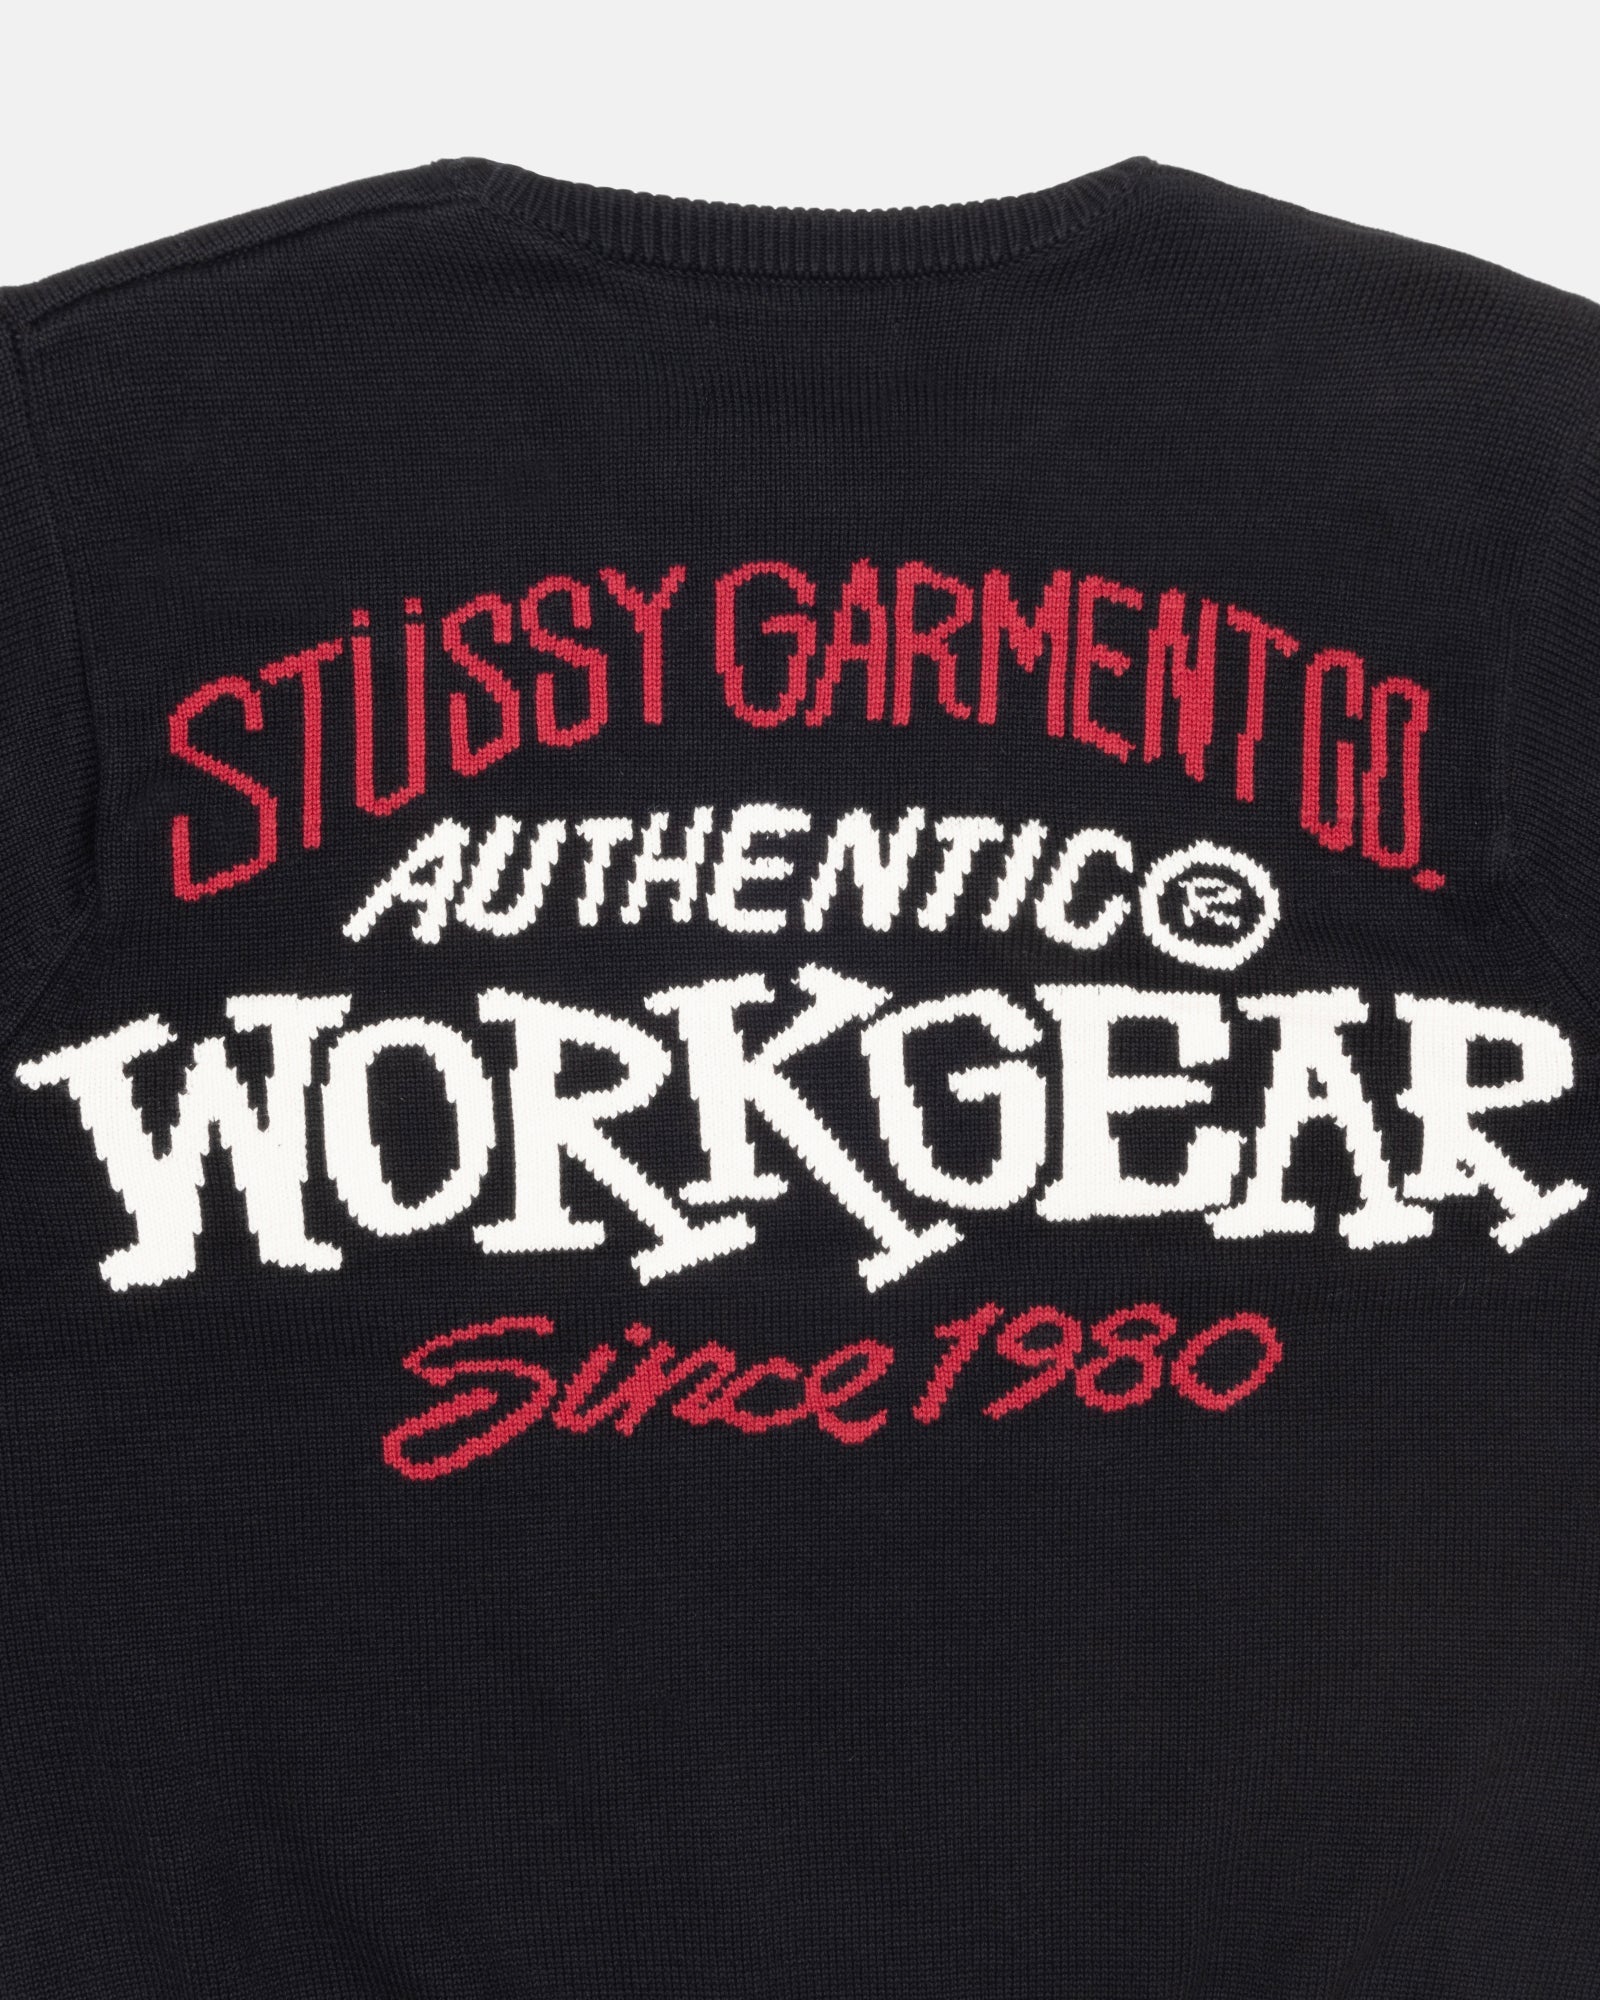 Stussy Authentic Workgear Sweater Mサイズ